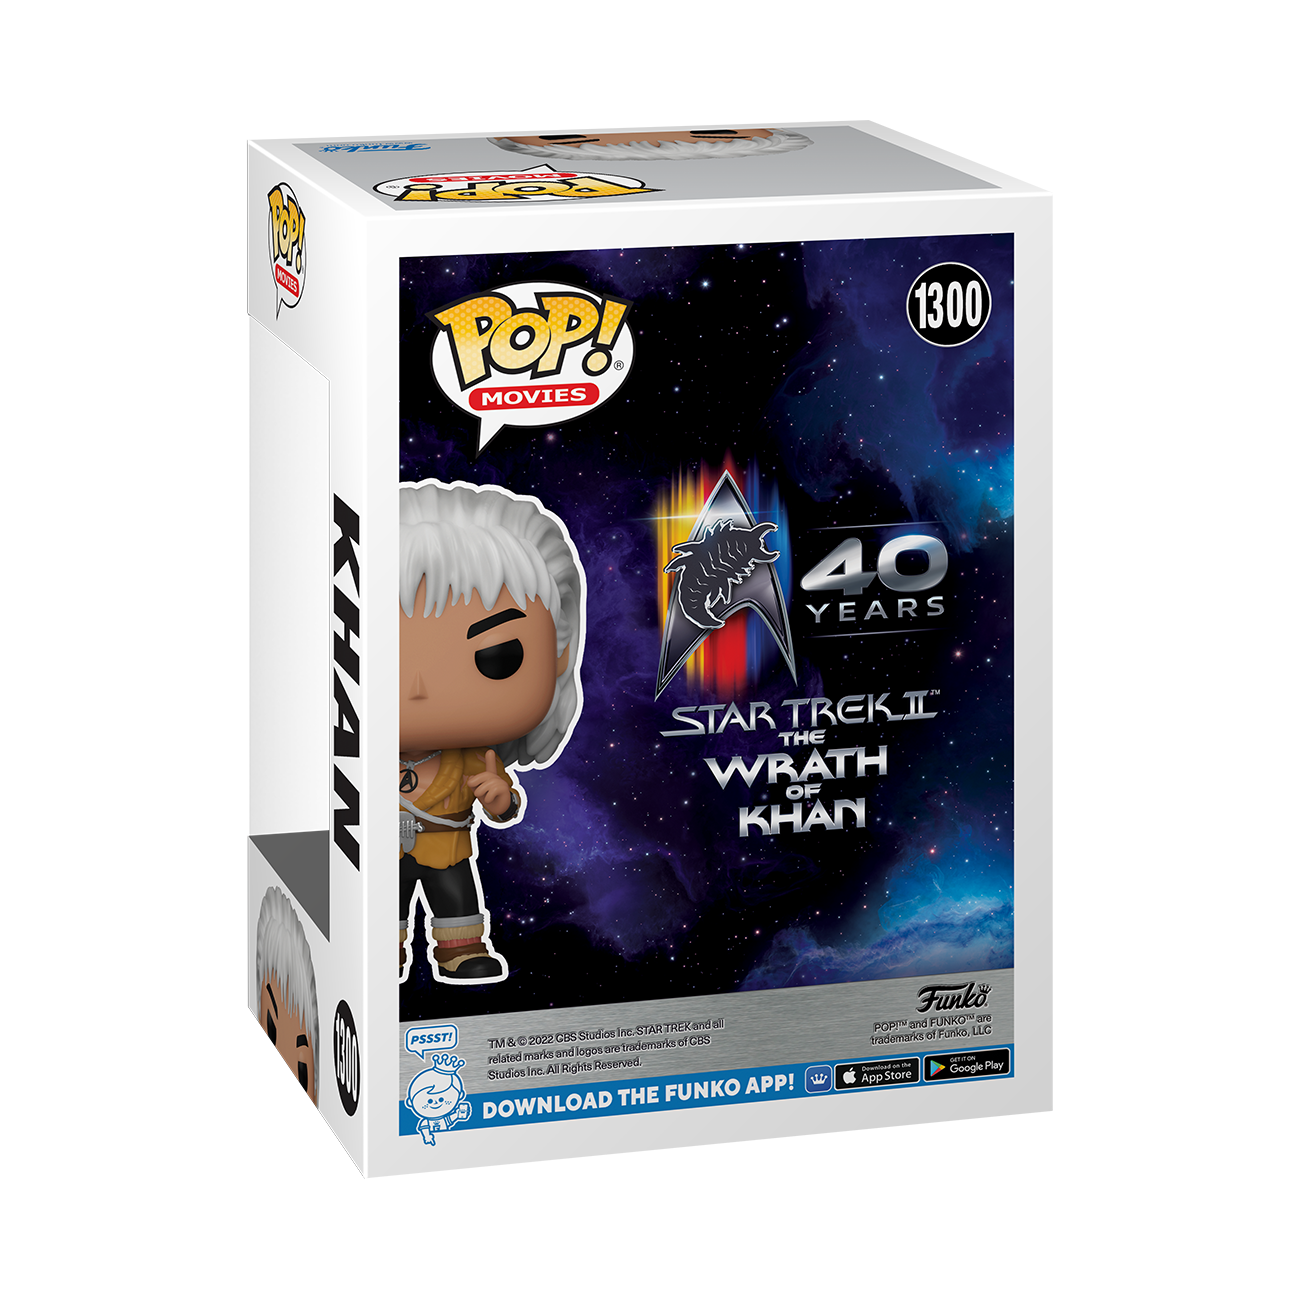 Star Trek II: The Wrath of Khan Funko POP ! Exclusive - 40th Anniversary Limited Edition Figure